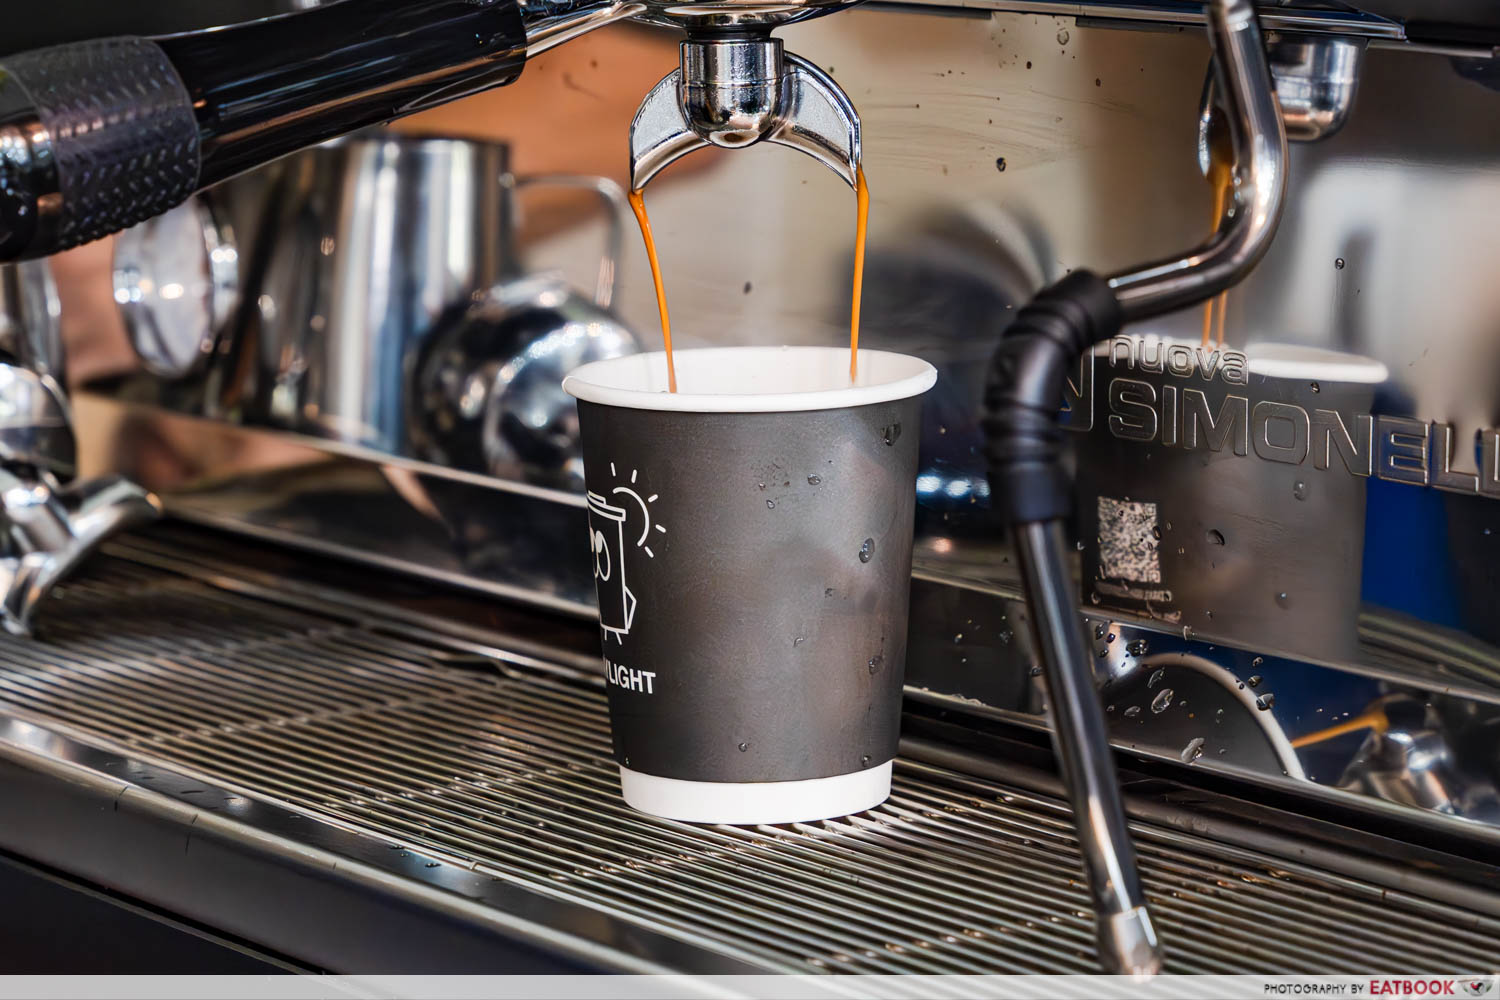 Daylight-Coffee-coffee-making (4)